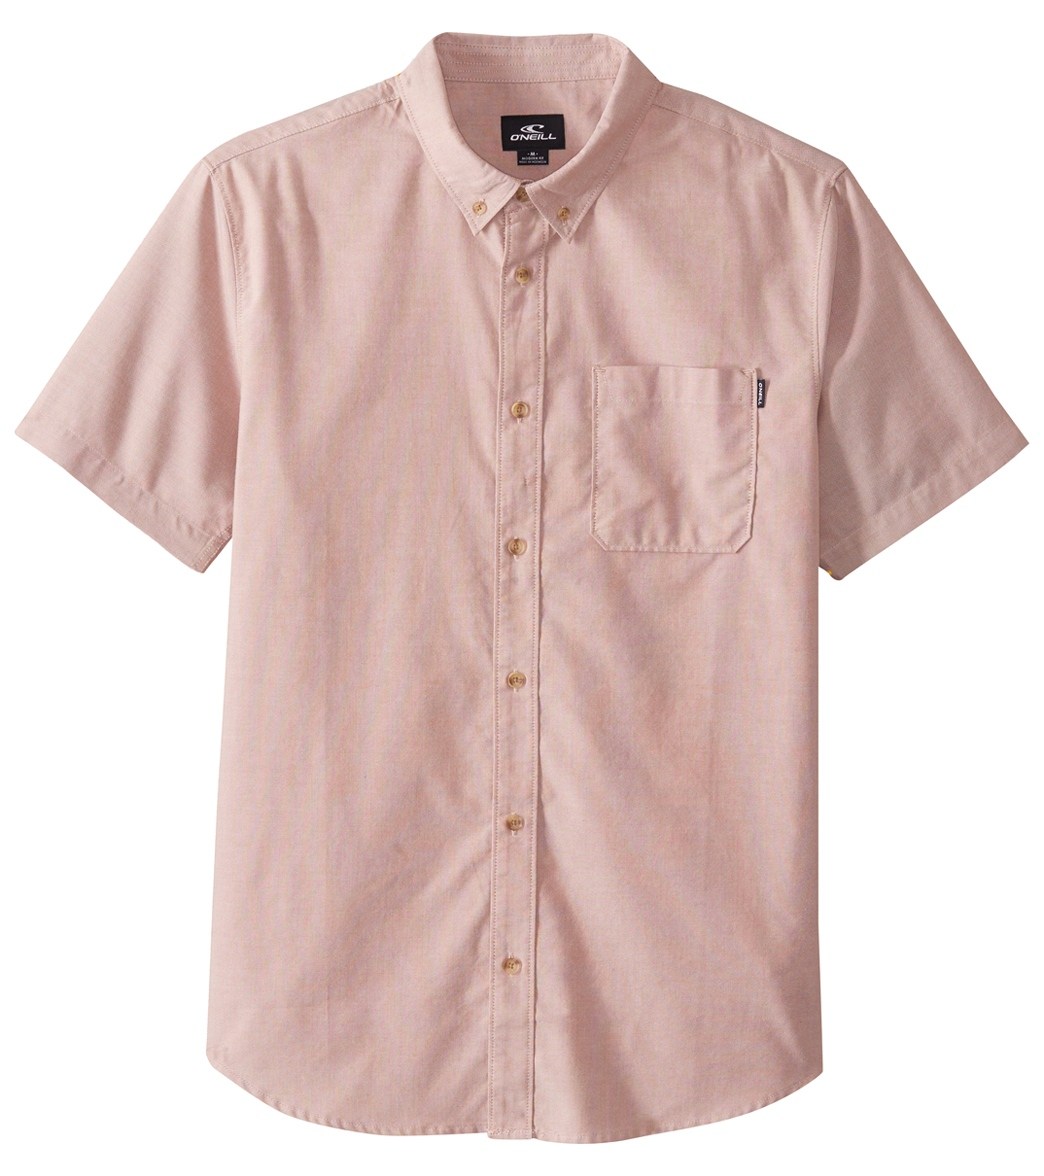 O'neill Men's Banks Shirt - Russet Small Cotton/Polyester - Swimoutlet.com